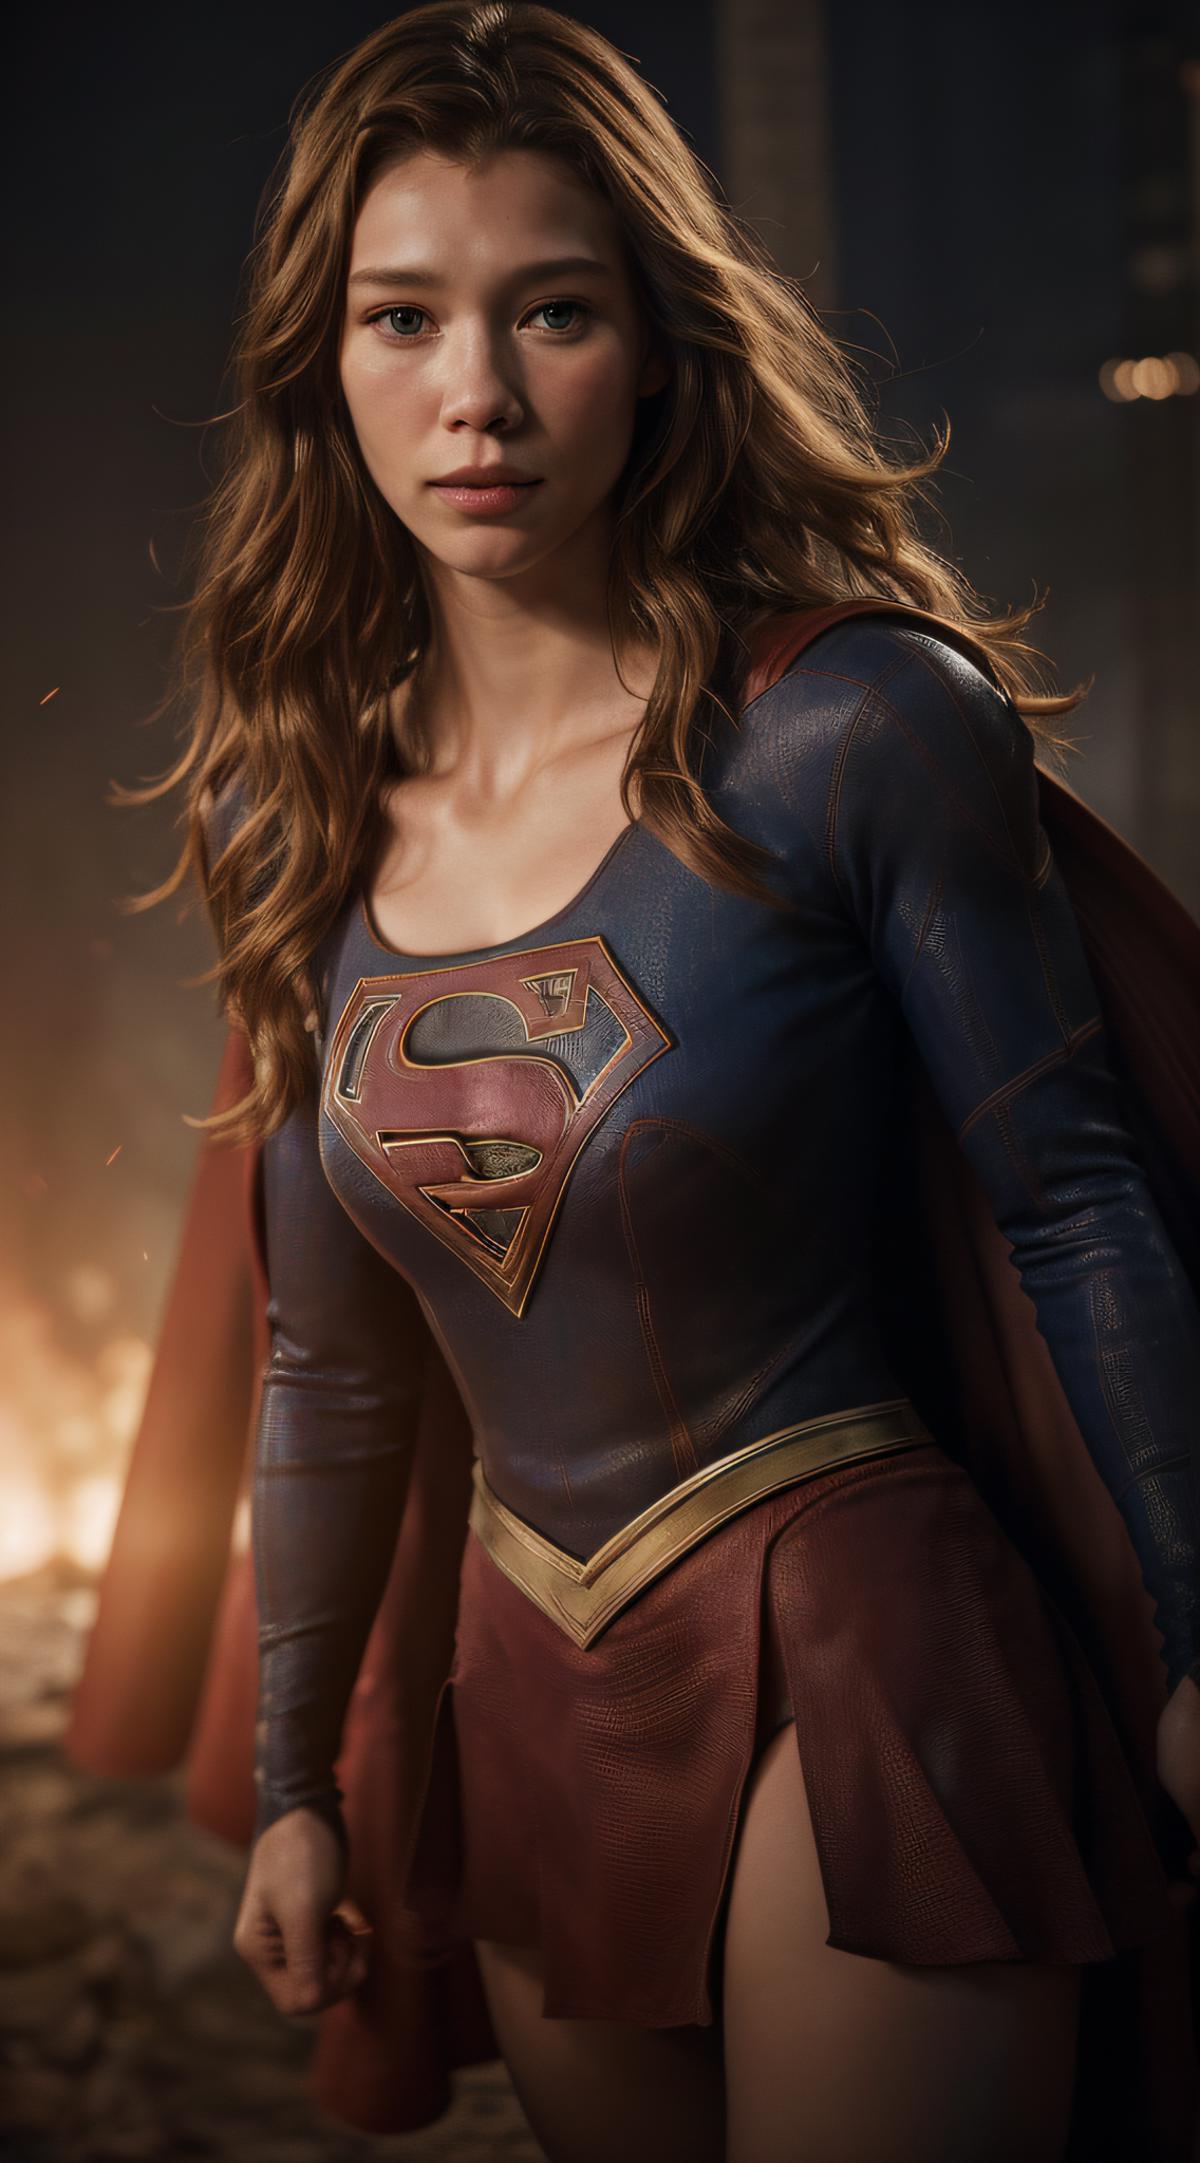 Supergirl suit image by markplunder